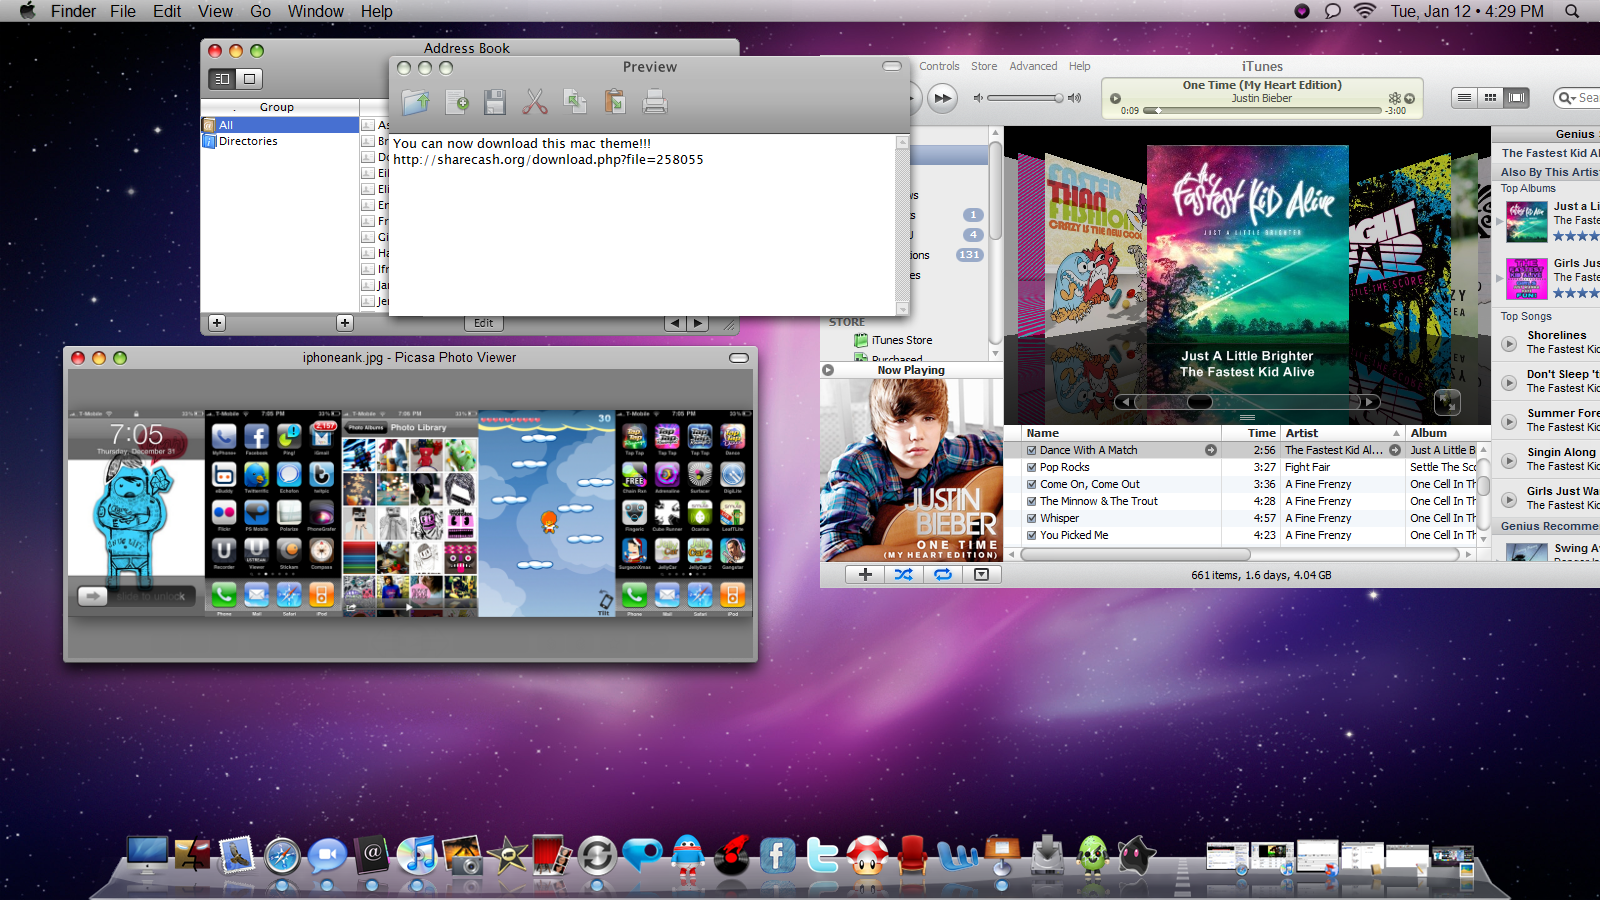 Apple Mac Theme For Windows 7 Free Download